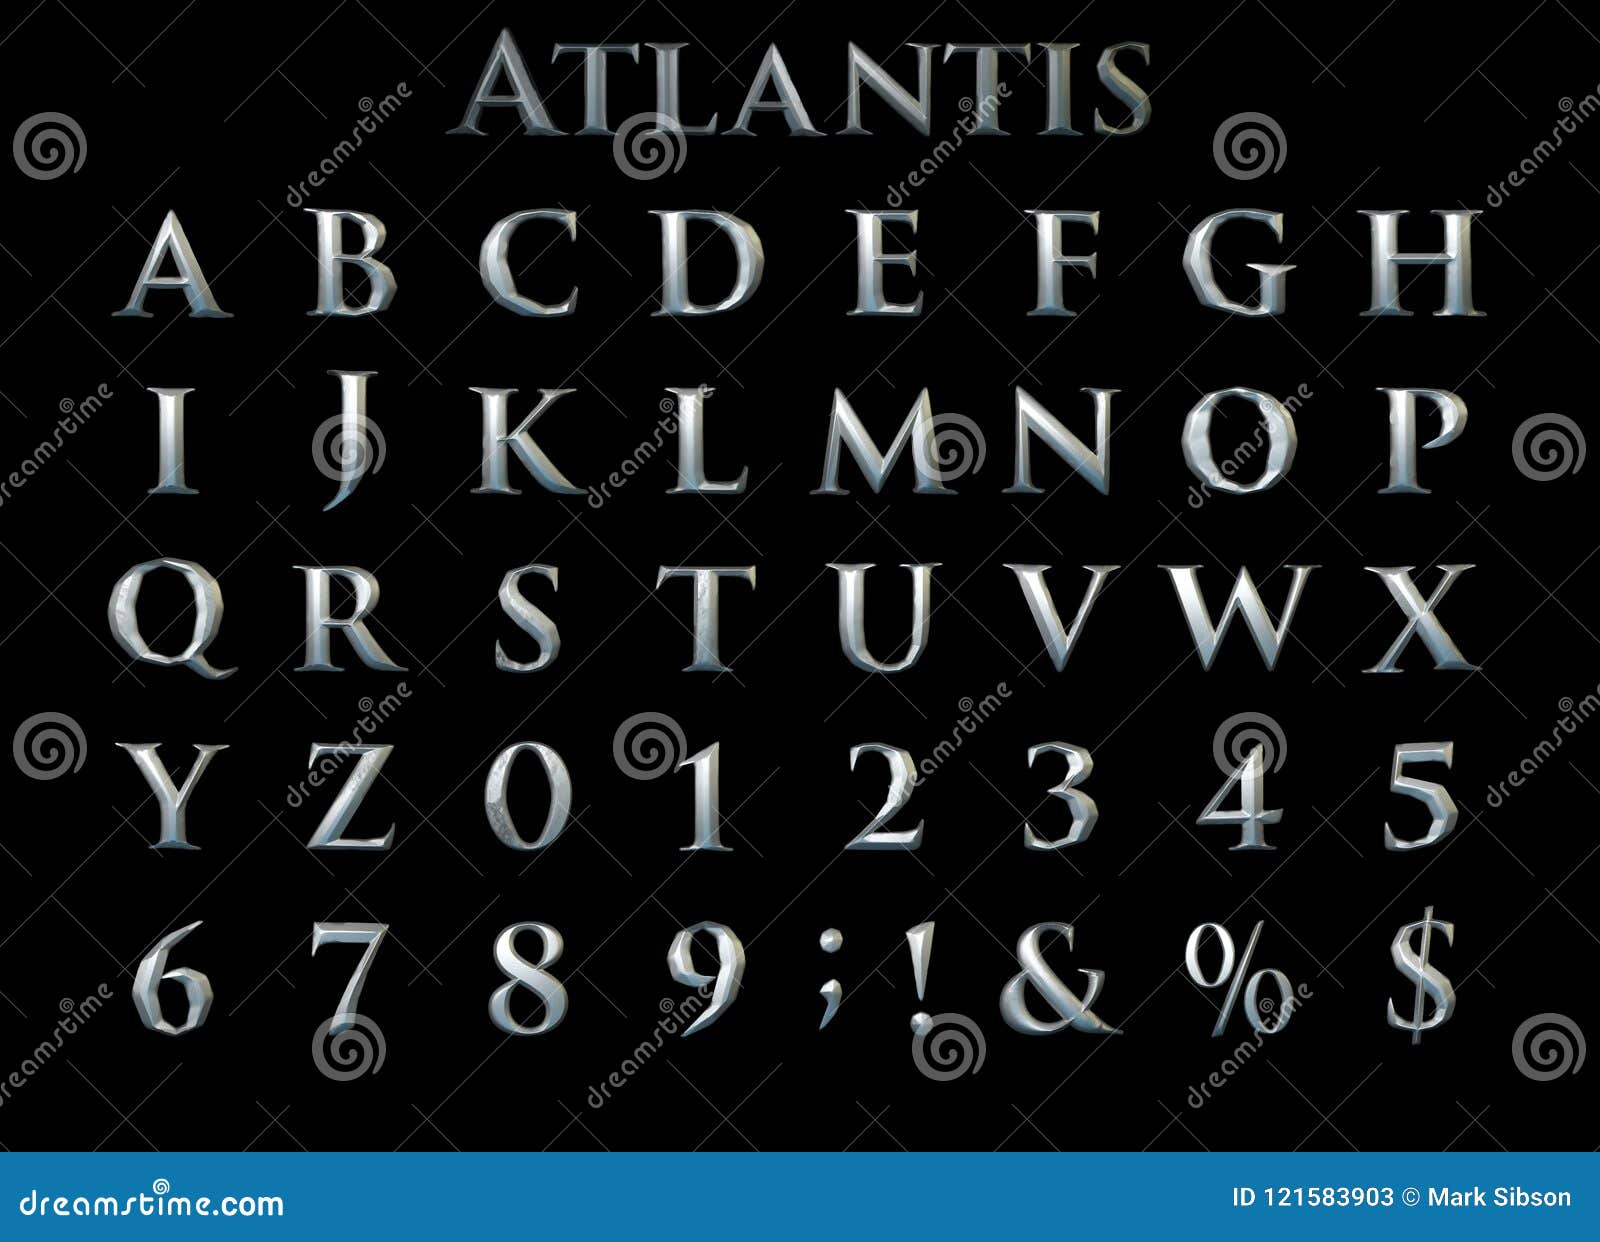 fantasy heavy metal `atlantis` alphabet - 3d .